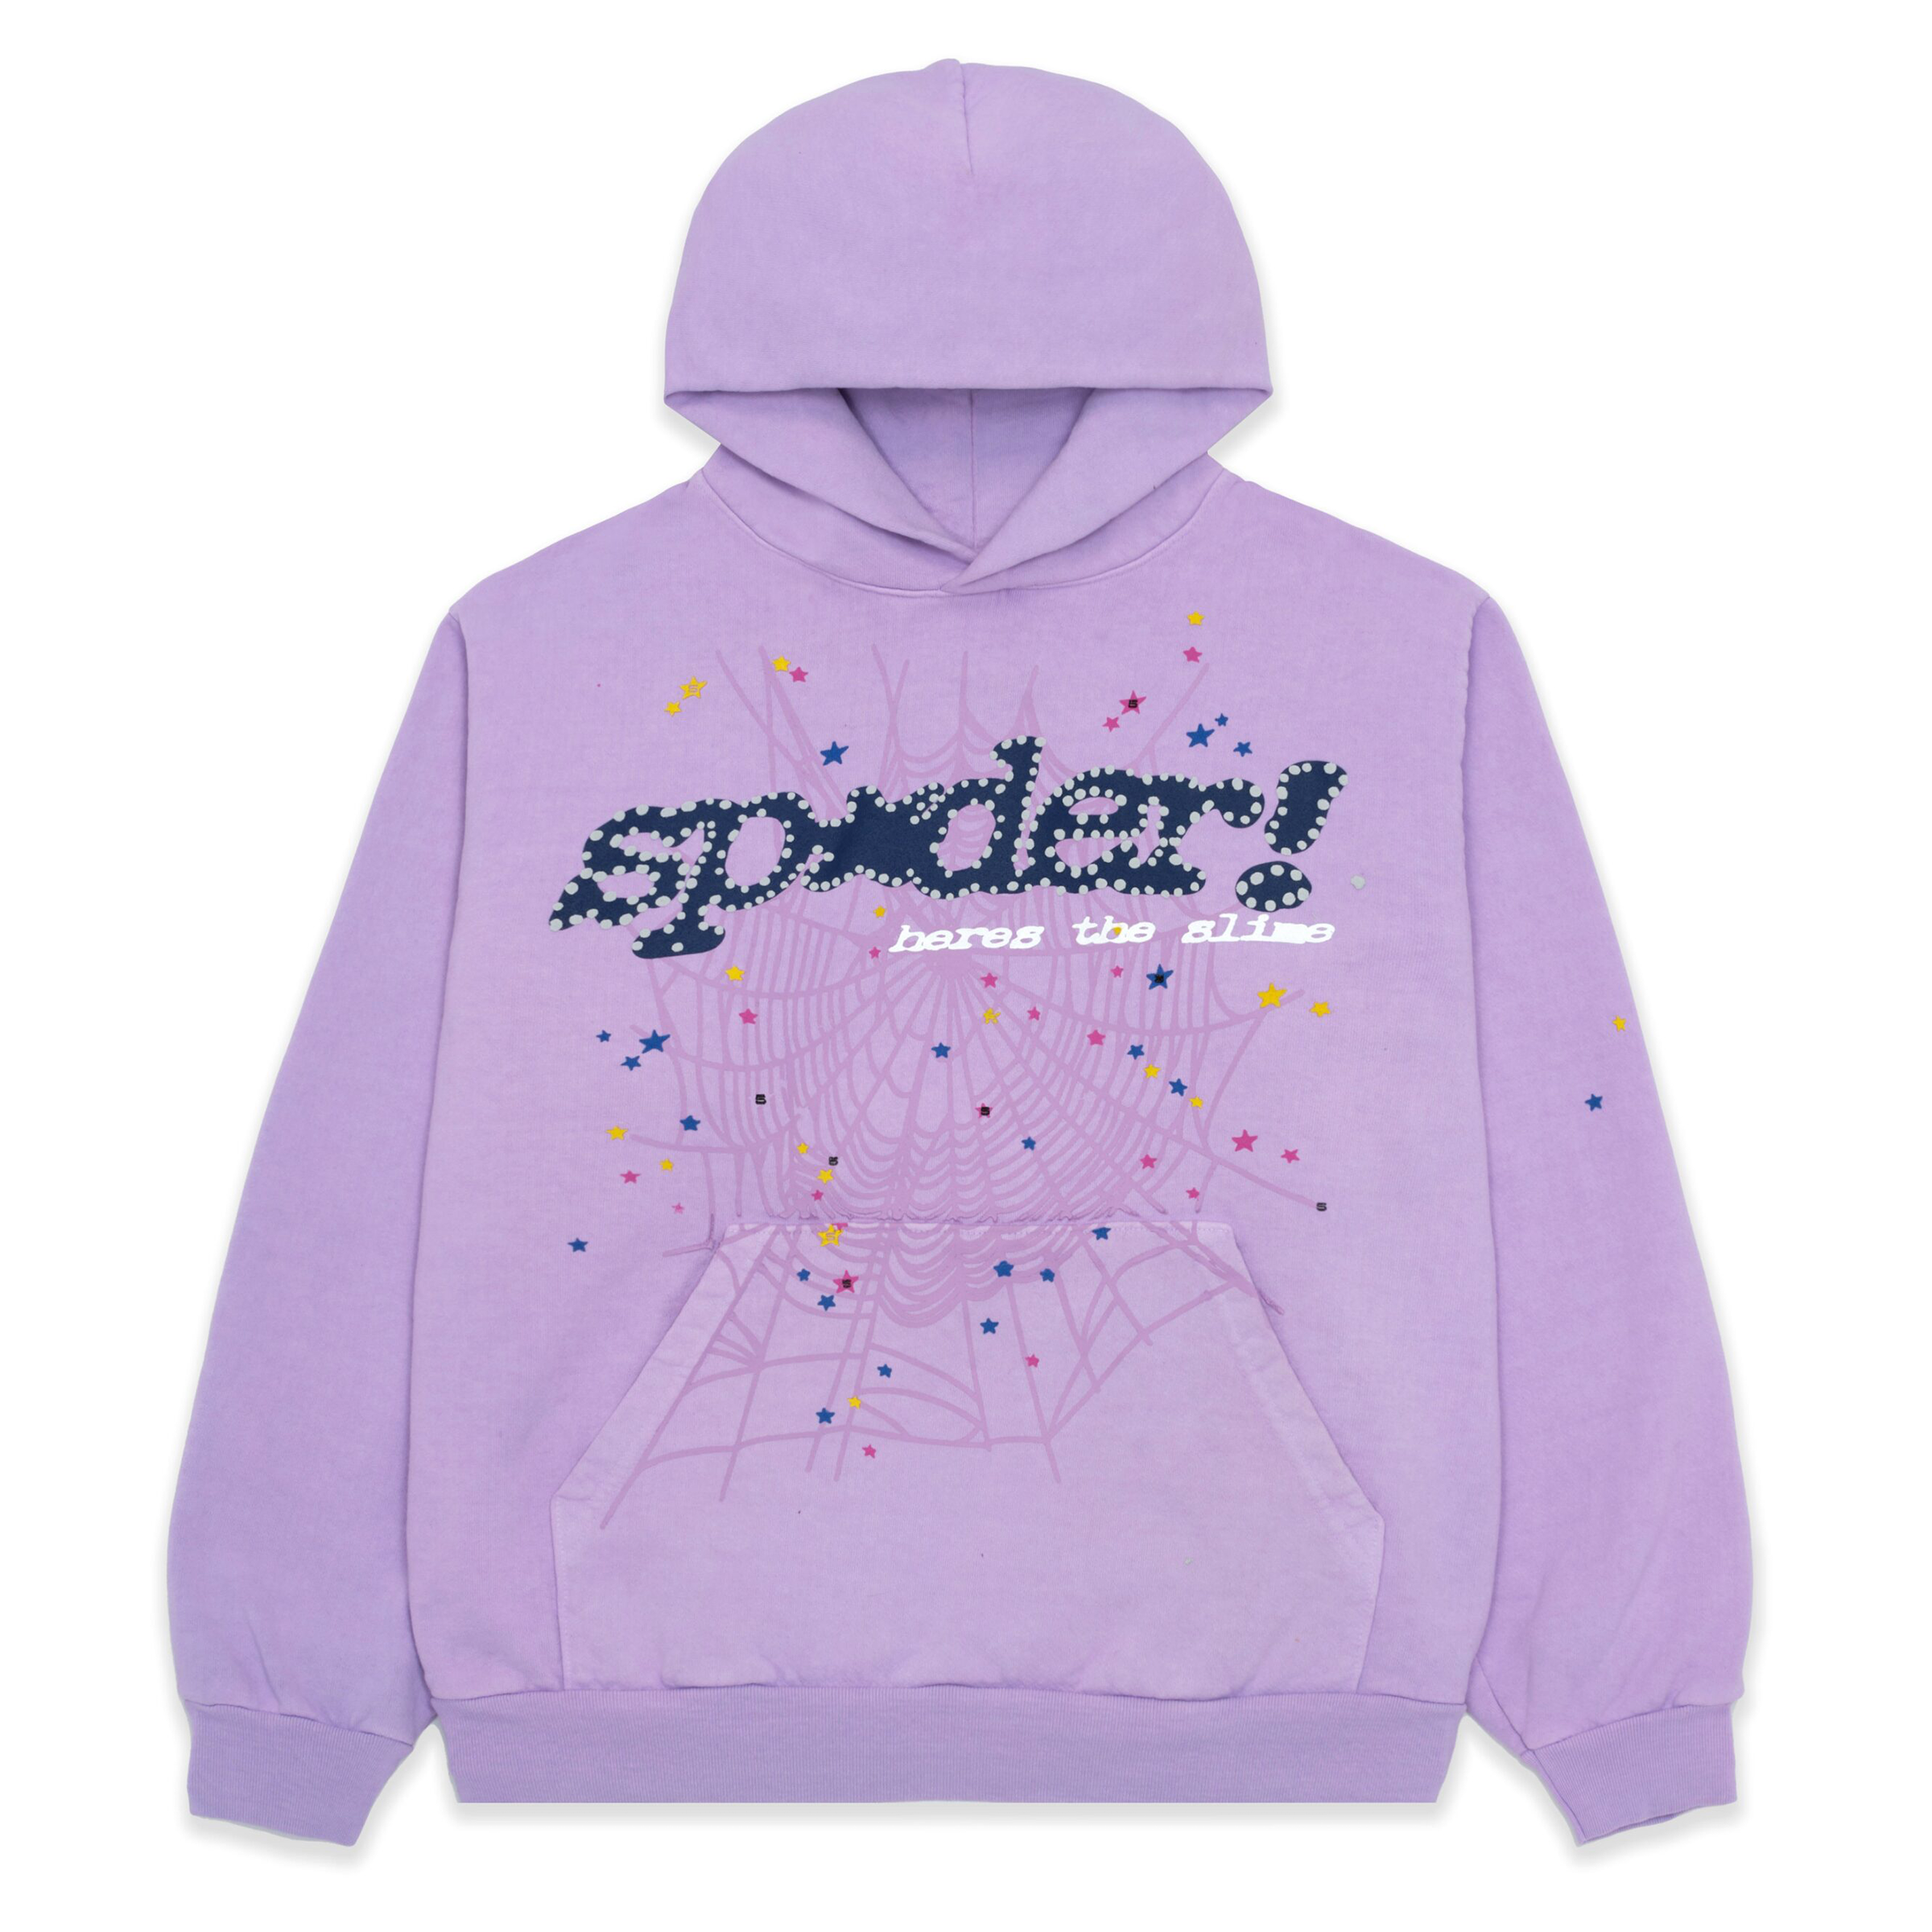 Sp5der "Acai Web" Hooded Sweatshirt